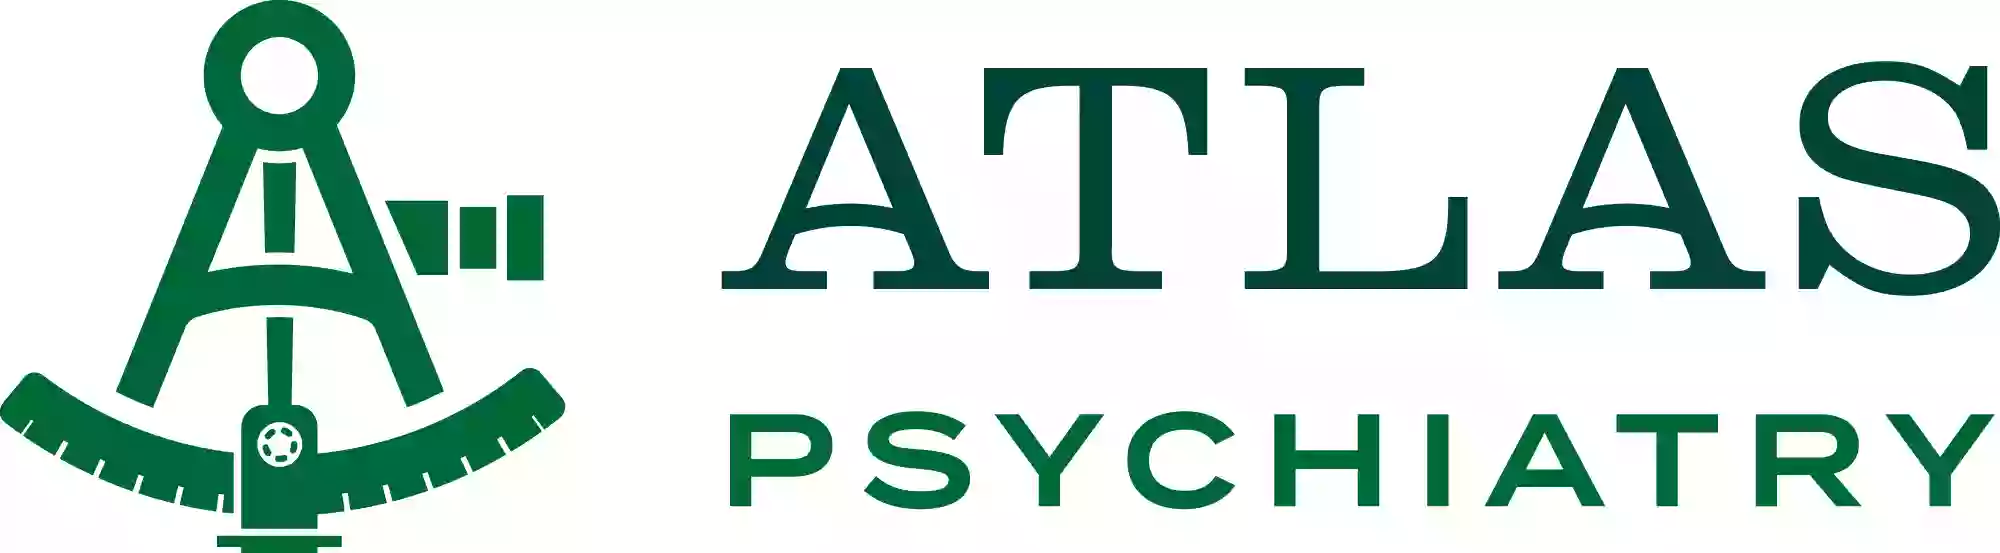 Atlas Psychiatry, PLLC